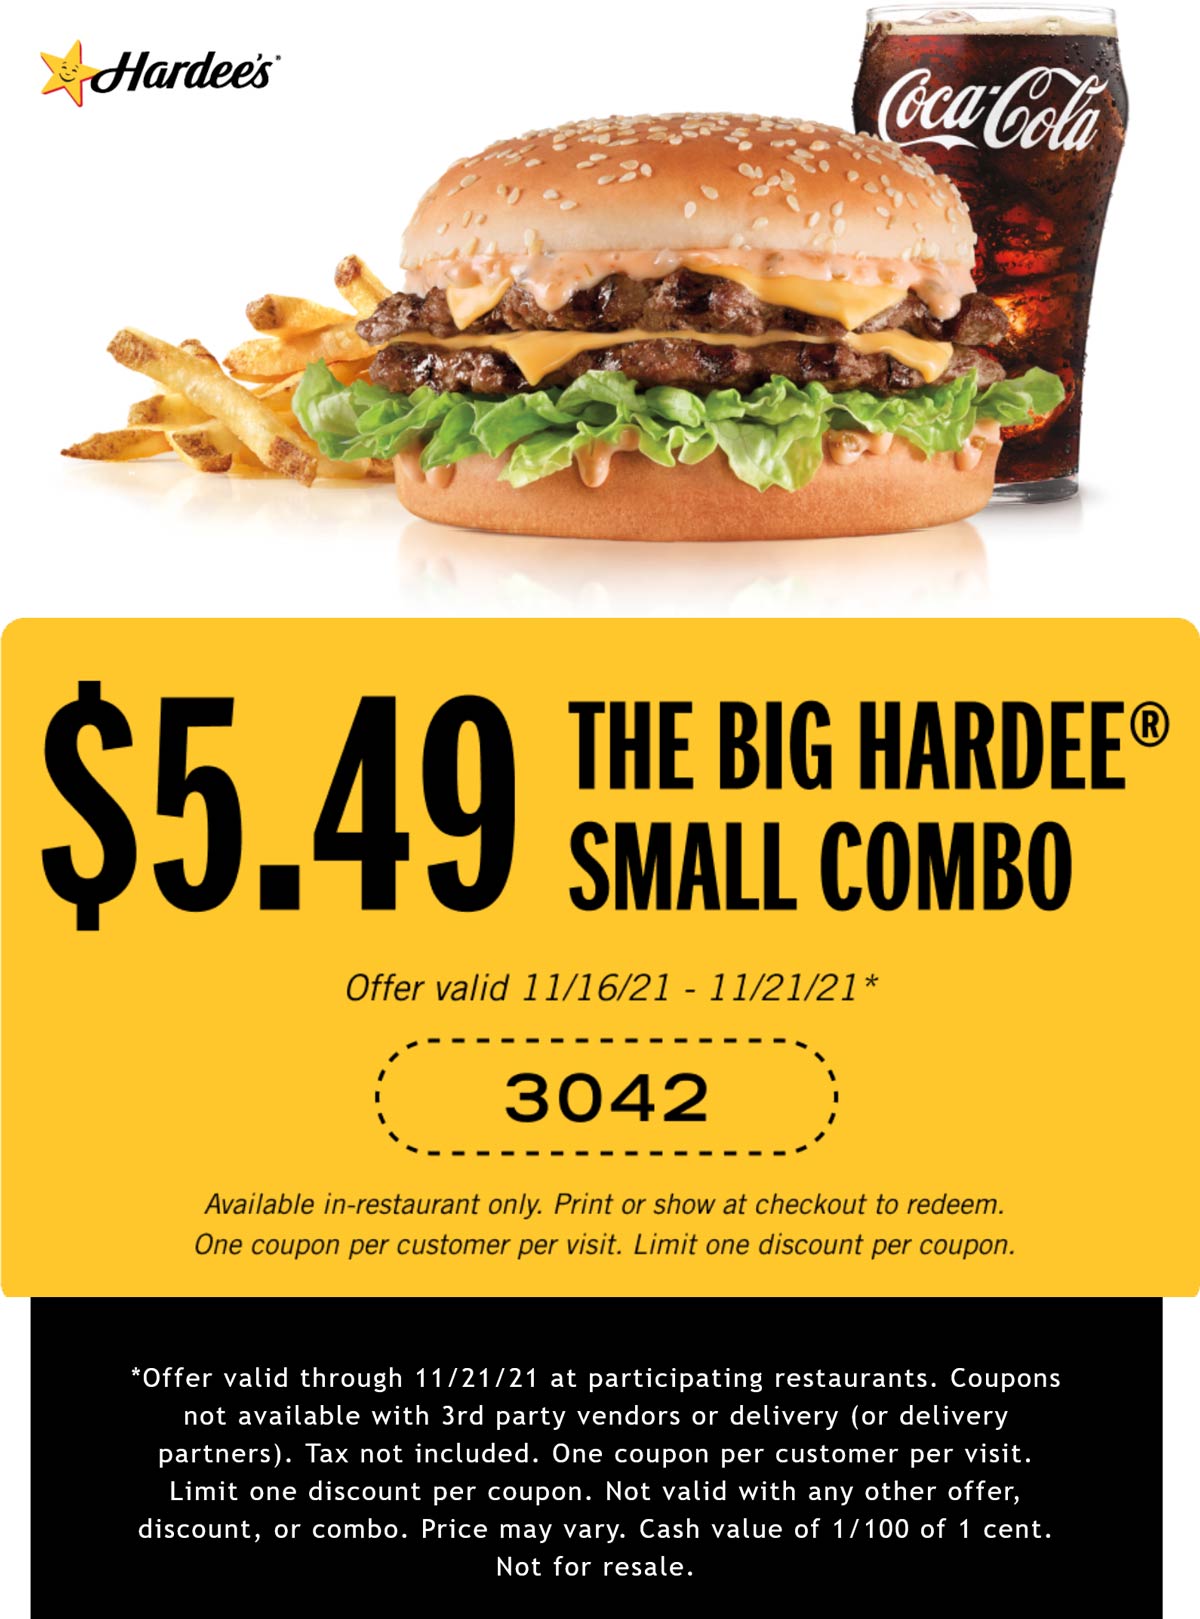 Hardees restaurants Coupon  Big cheeseburger combo meal = $5.49 at Hardees #hardees 